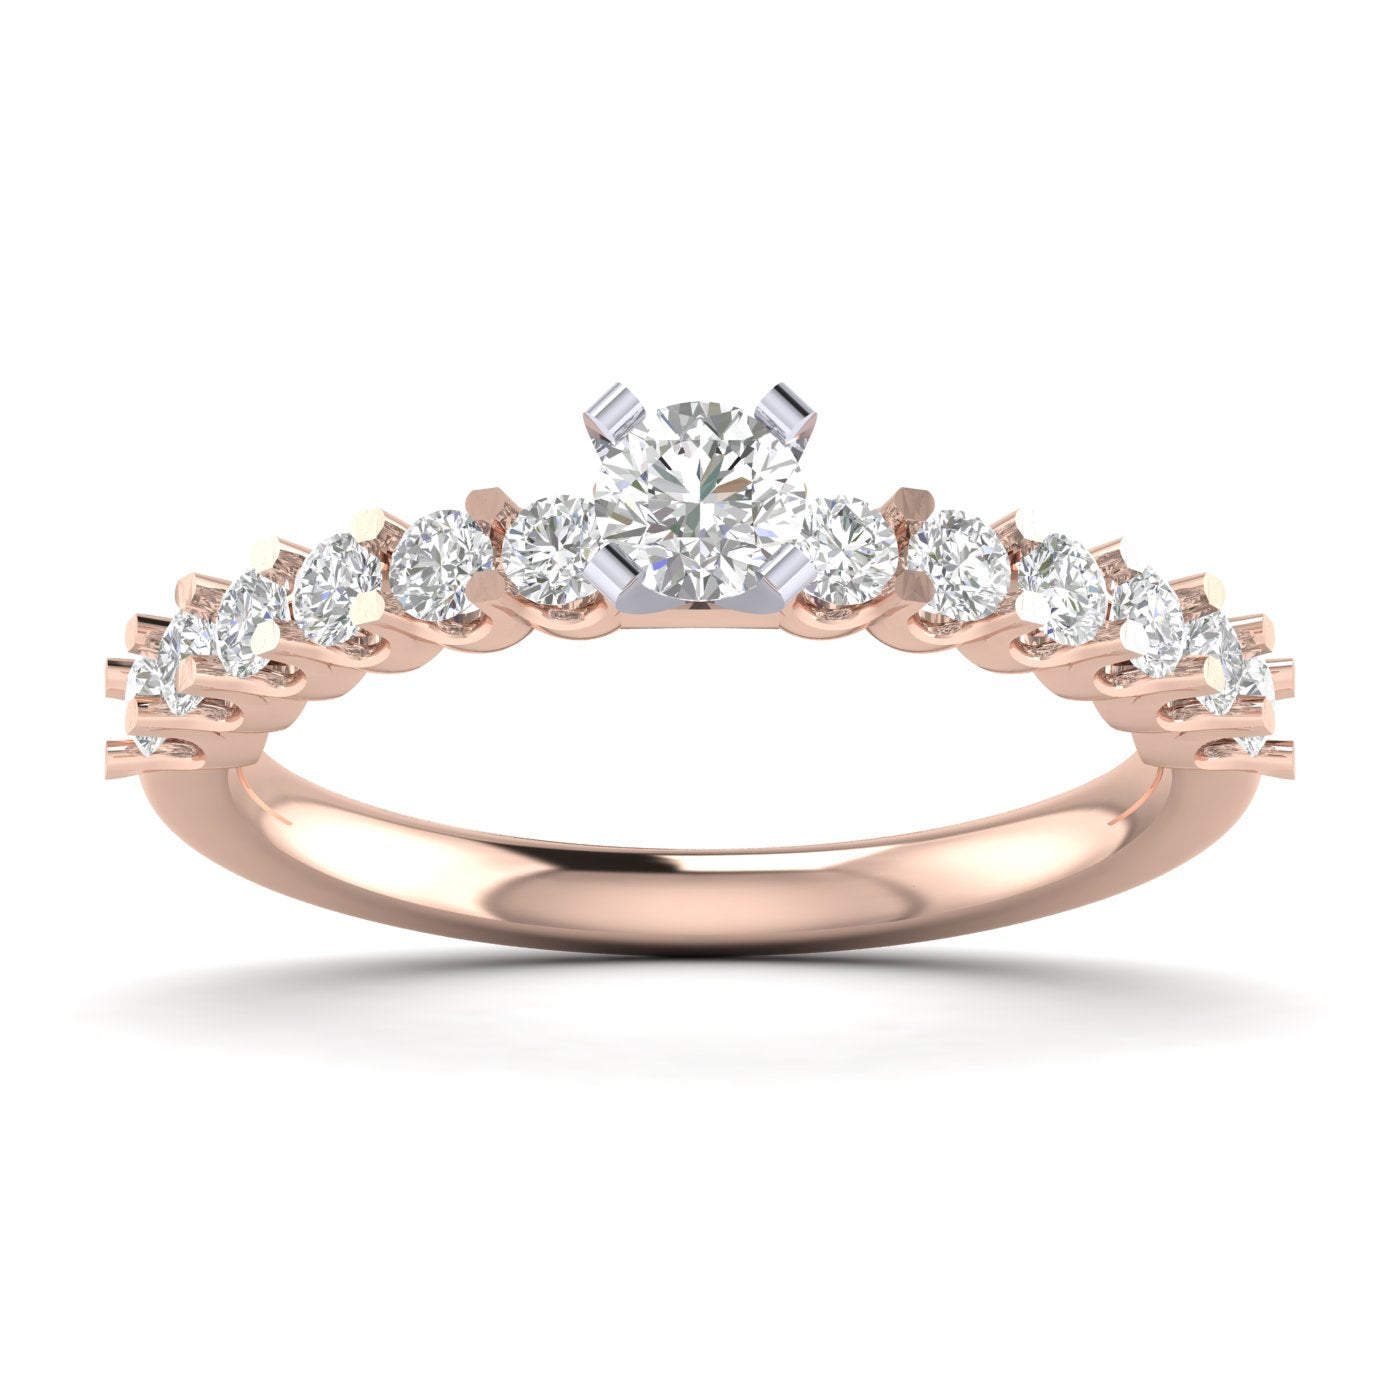 Circle of Brilliance Diamond Ring